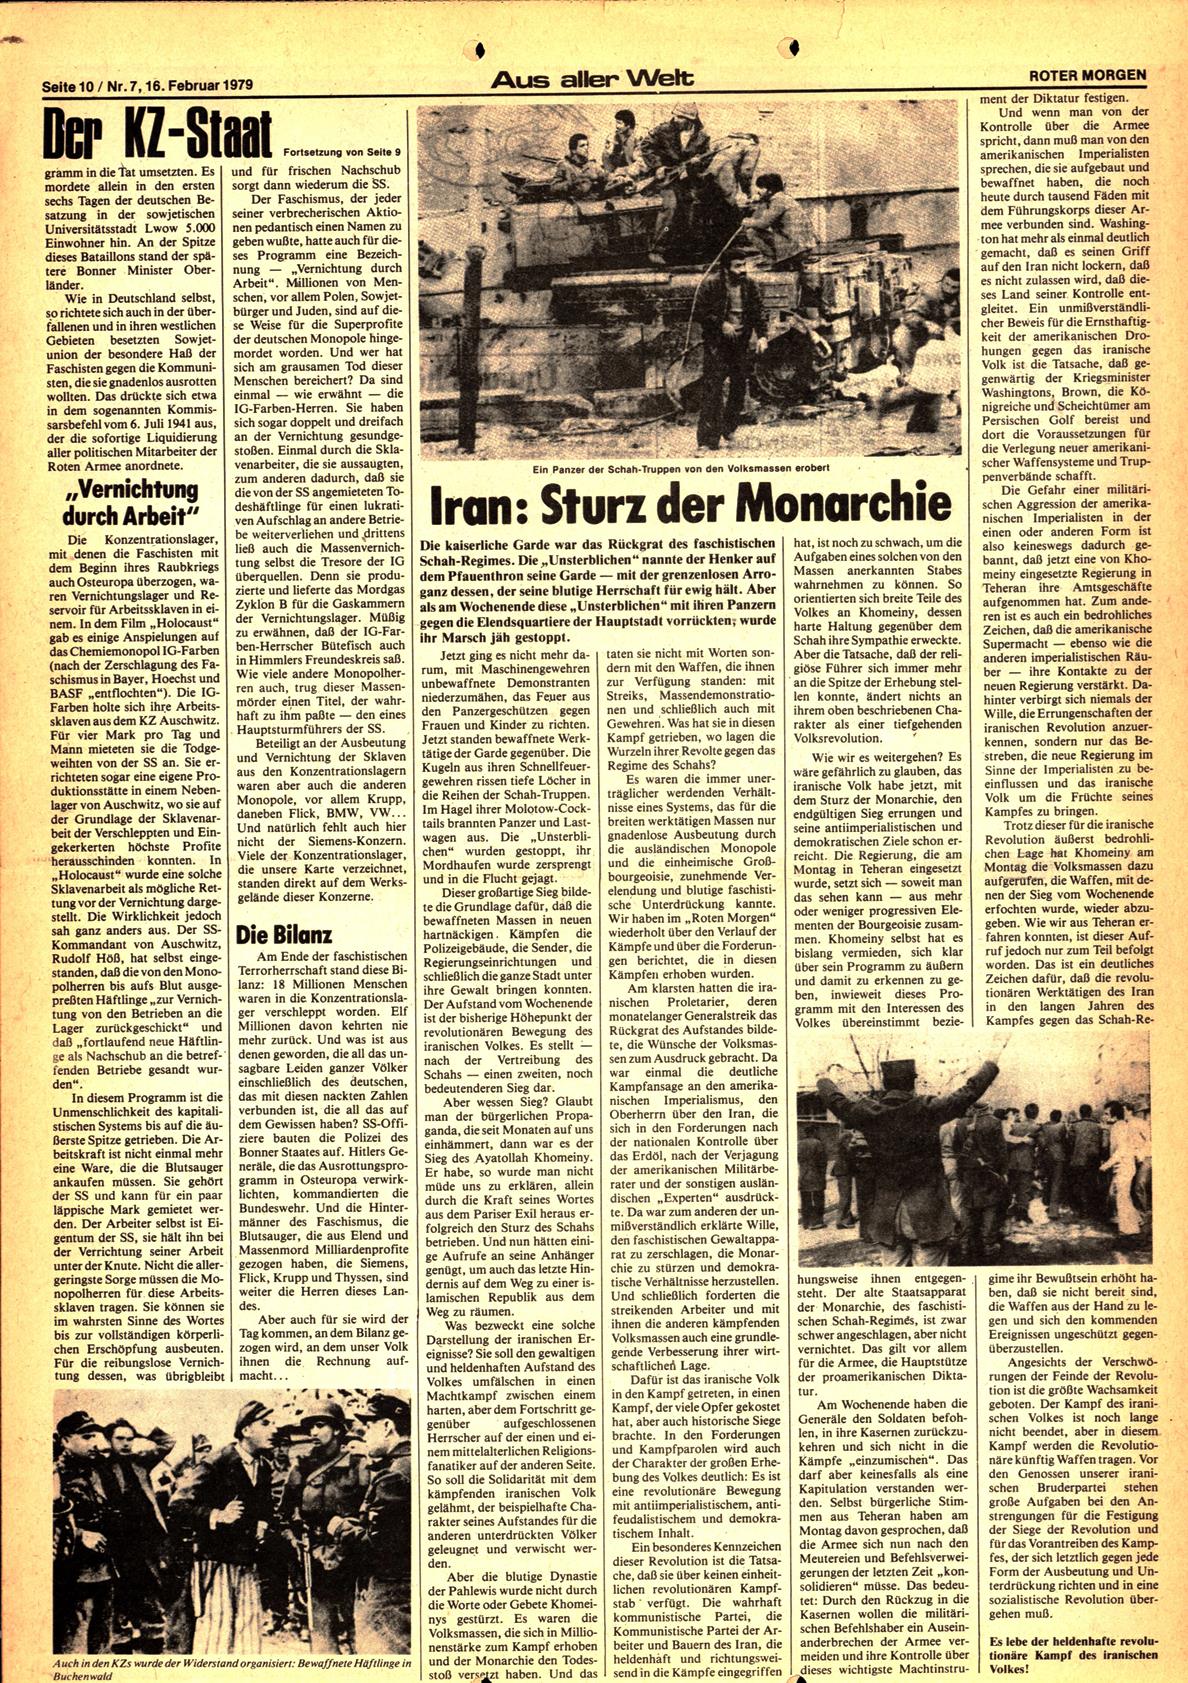 Roter Morgen, 13. Jg., 16. Februar 1979, Nr. 7, Seite 10